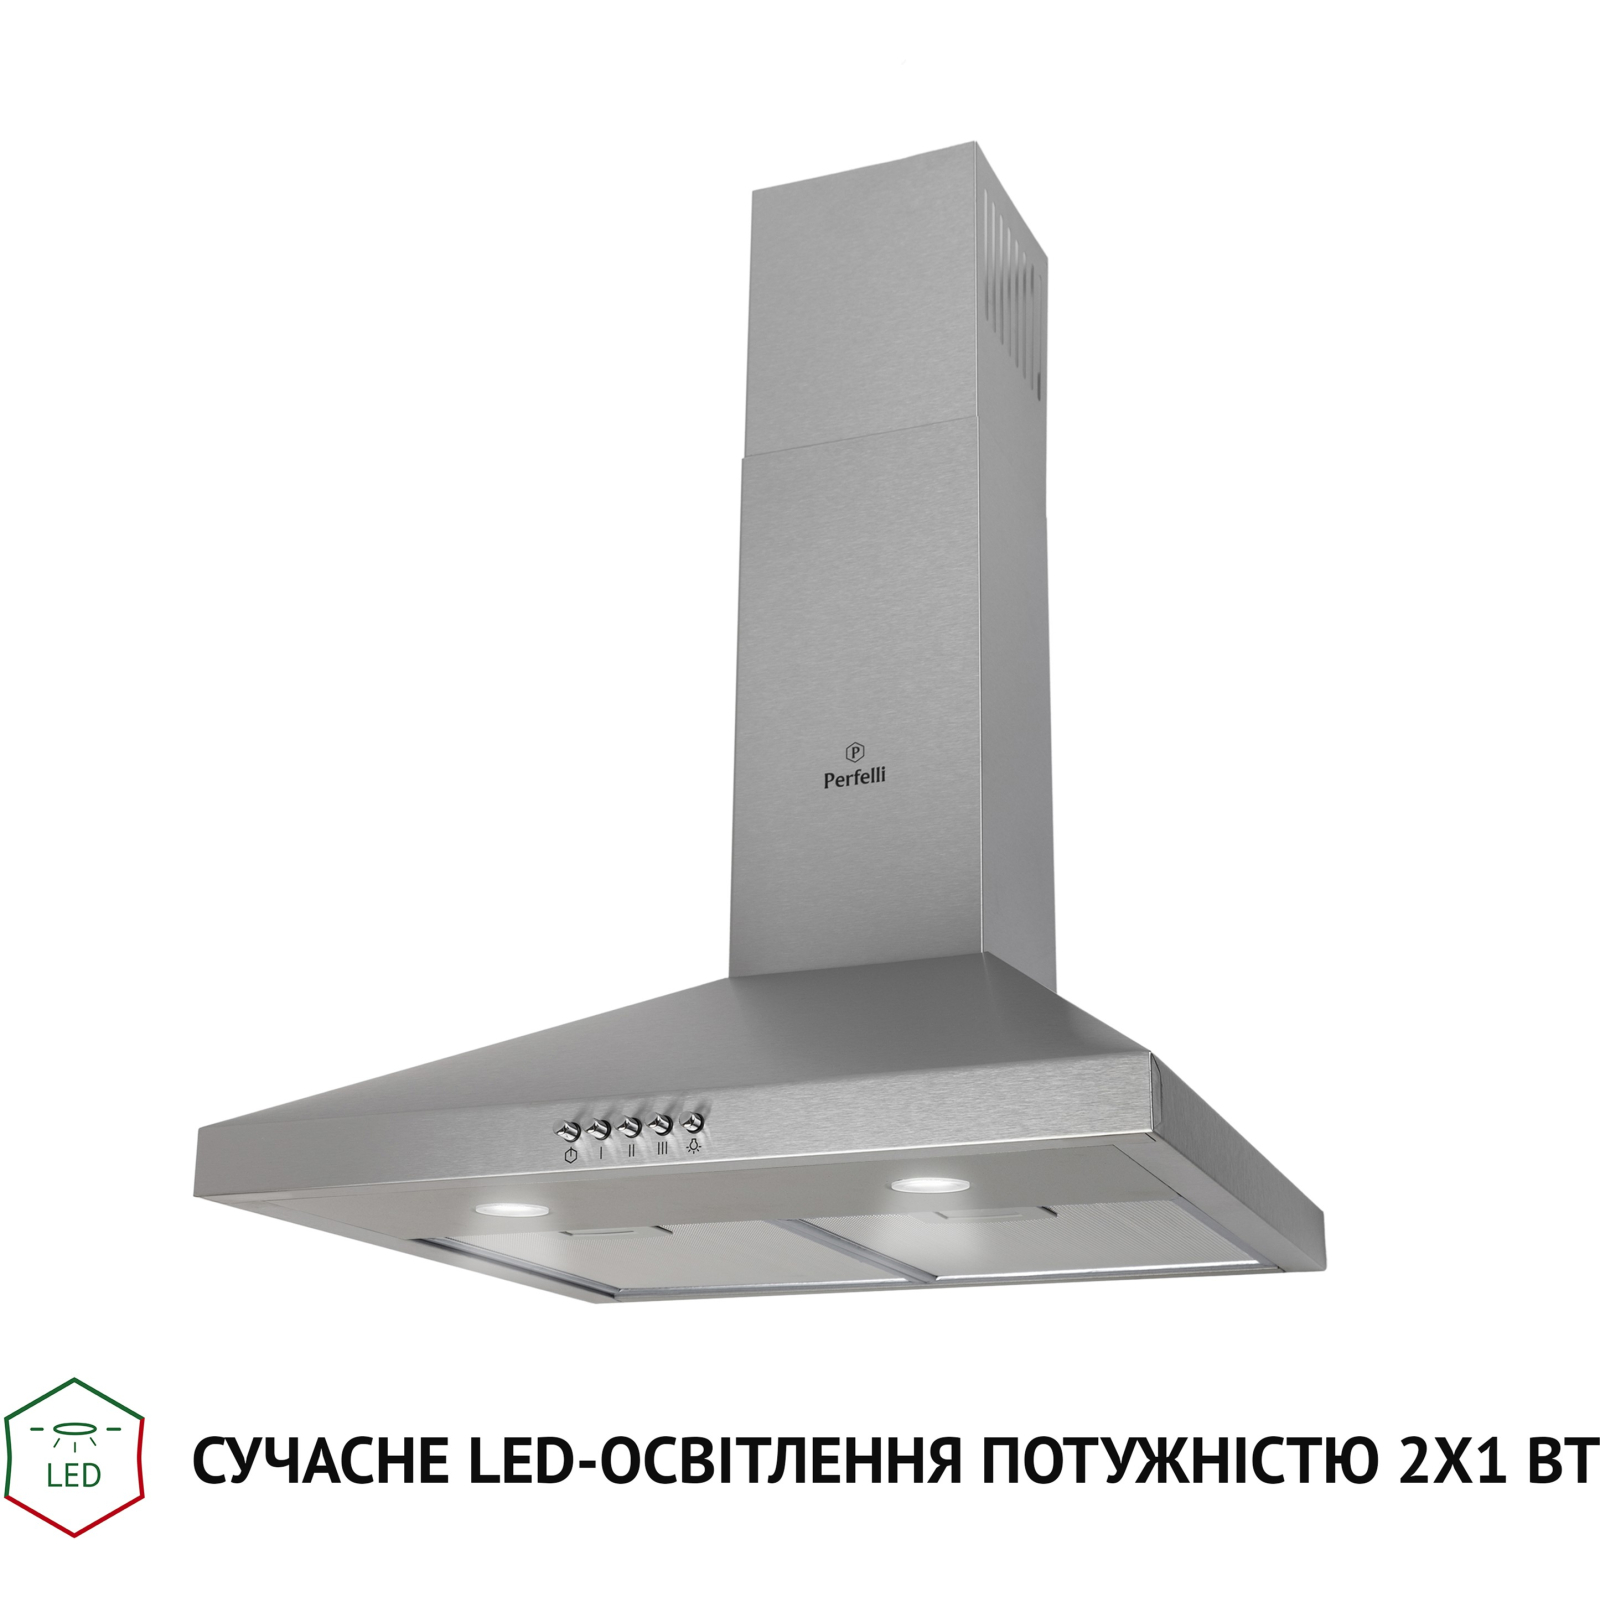 Вытяжка кухонная Perfelli K 5202 I 700 LED изображение 3